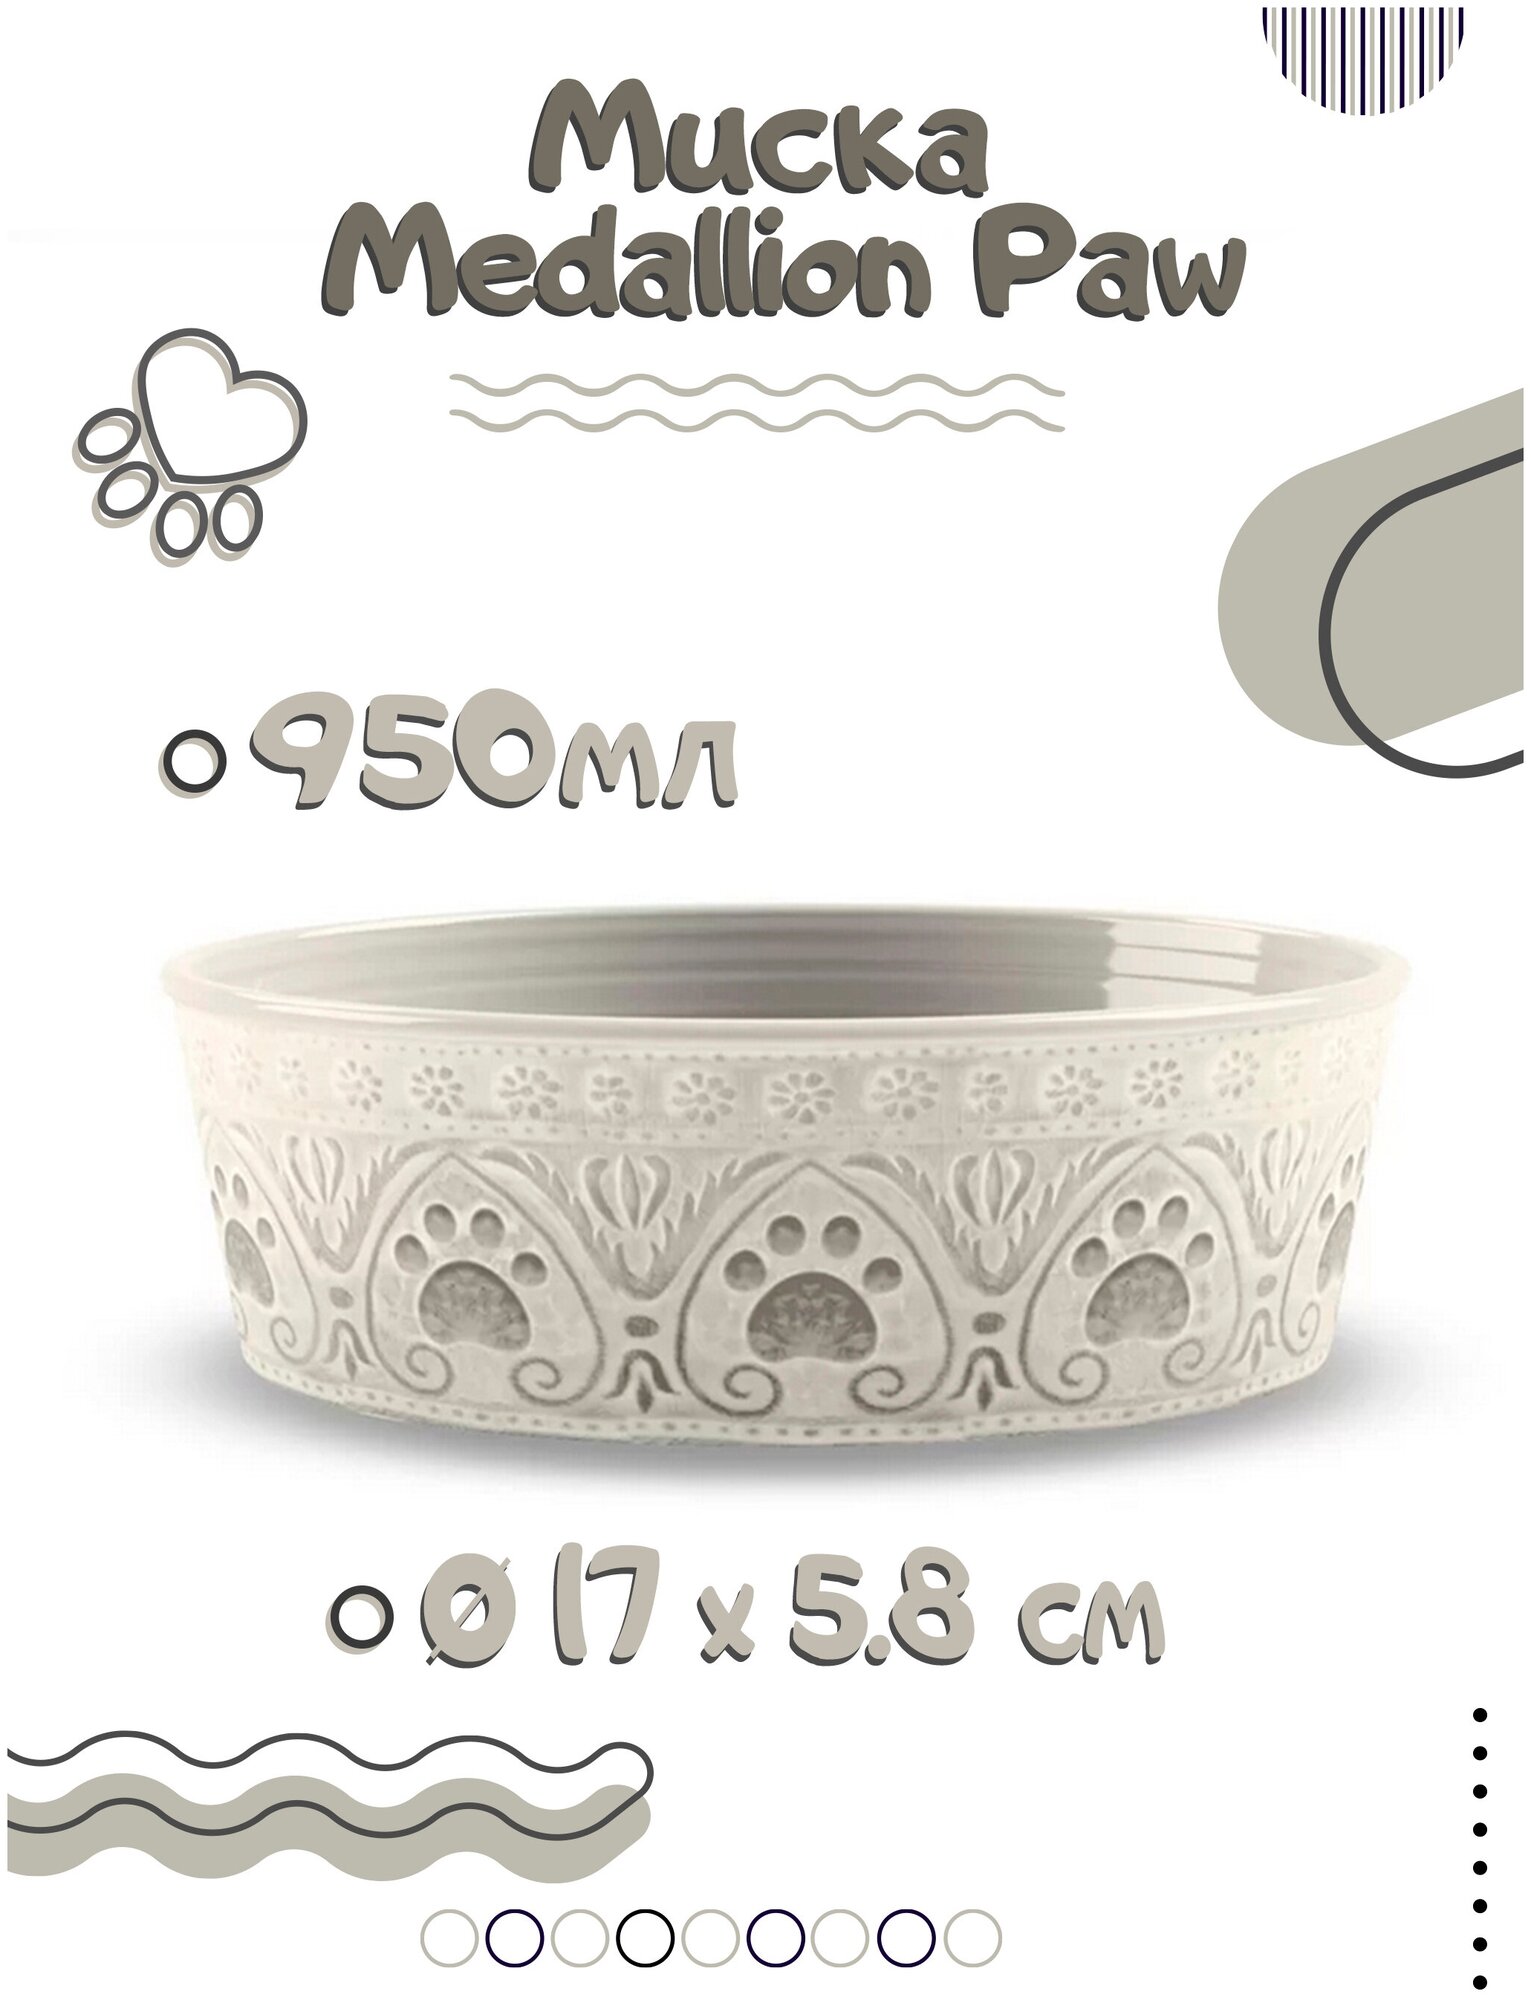 Миска для собак TARHONG "Medallion Paw", бежевая с лапками, 17х17х5.9см (950мл) (США)